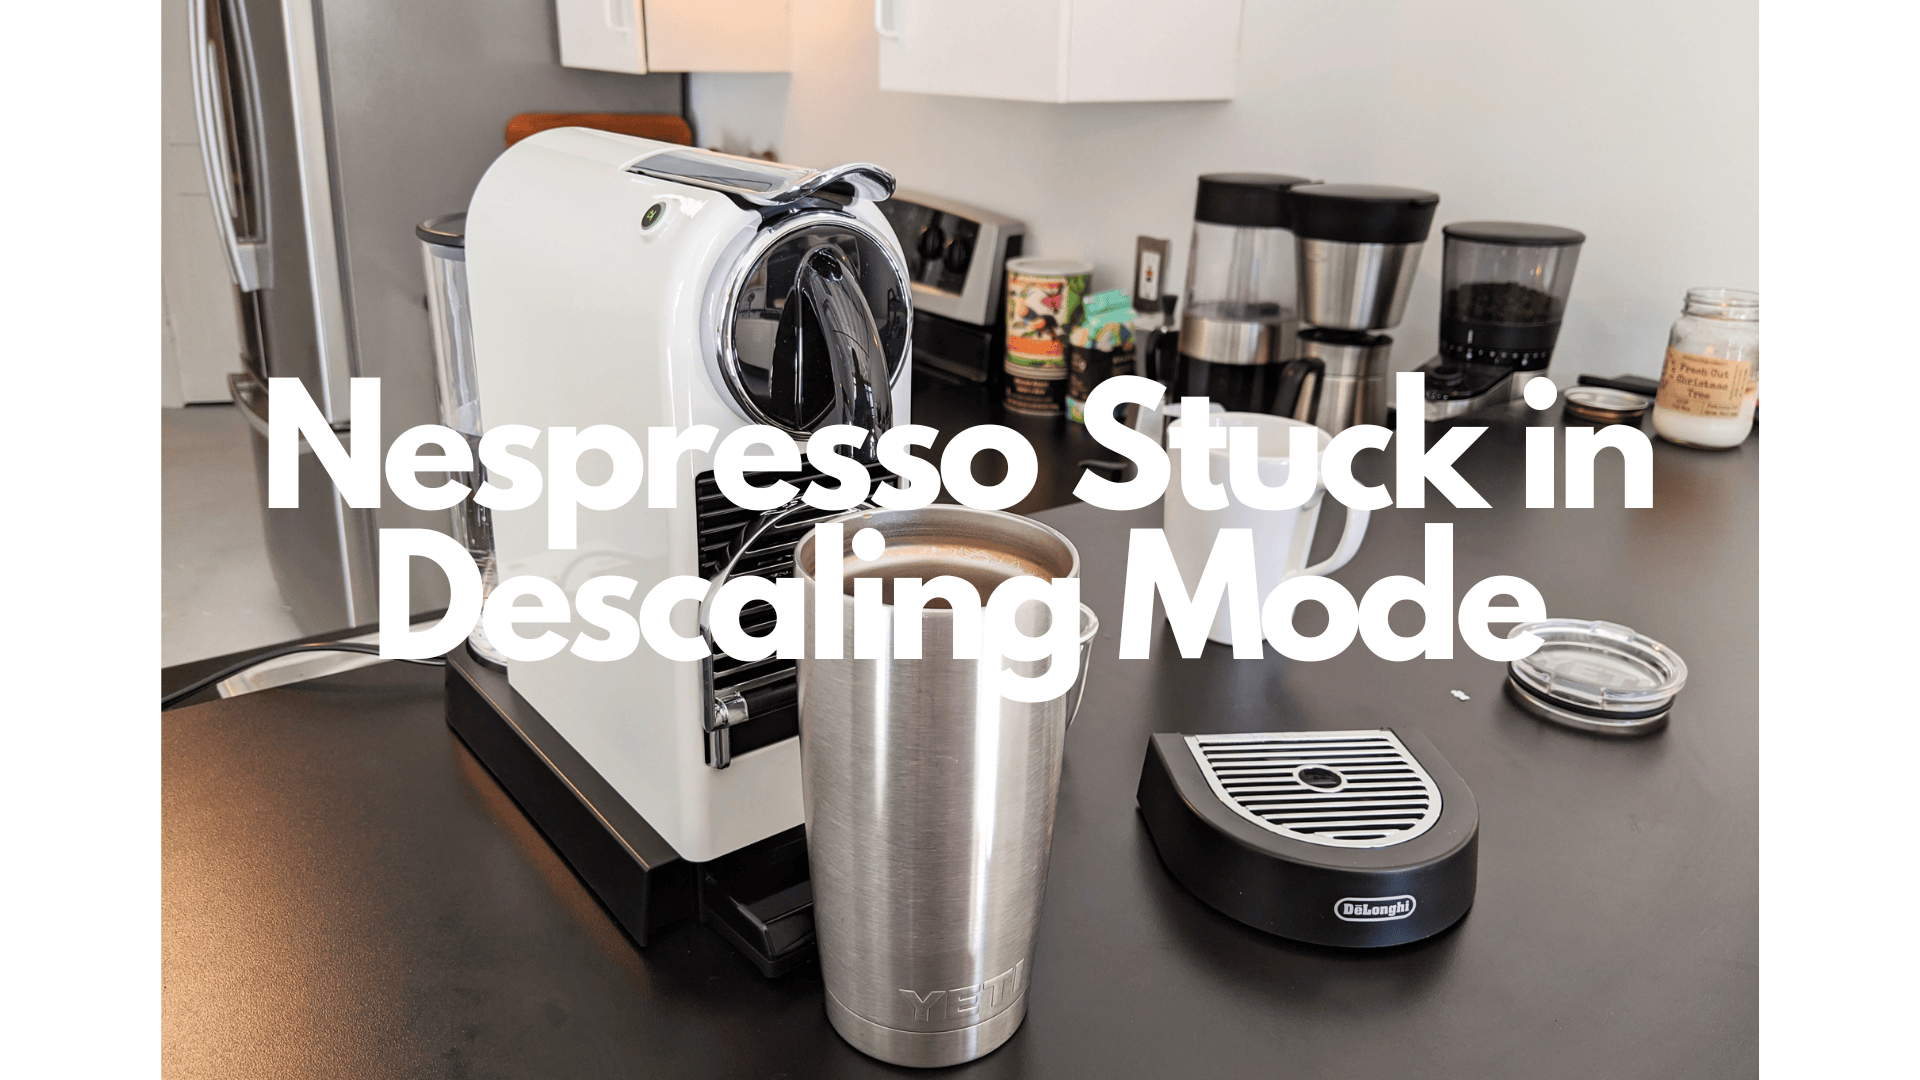 How to Fix Nespresso Stuck in Descaling Mode